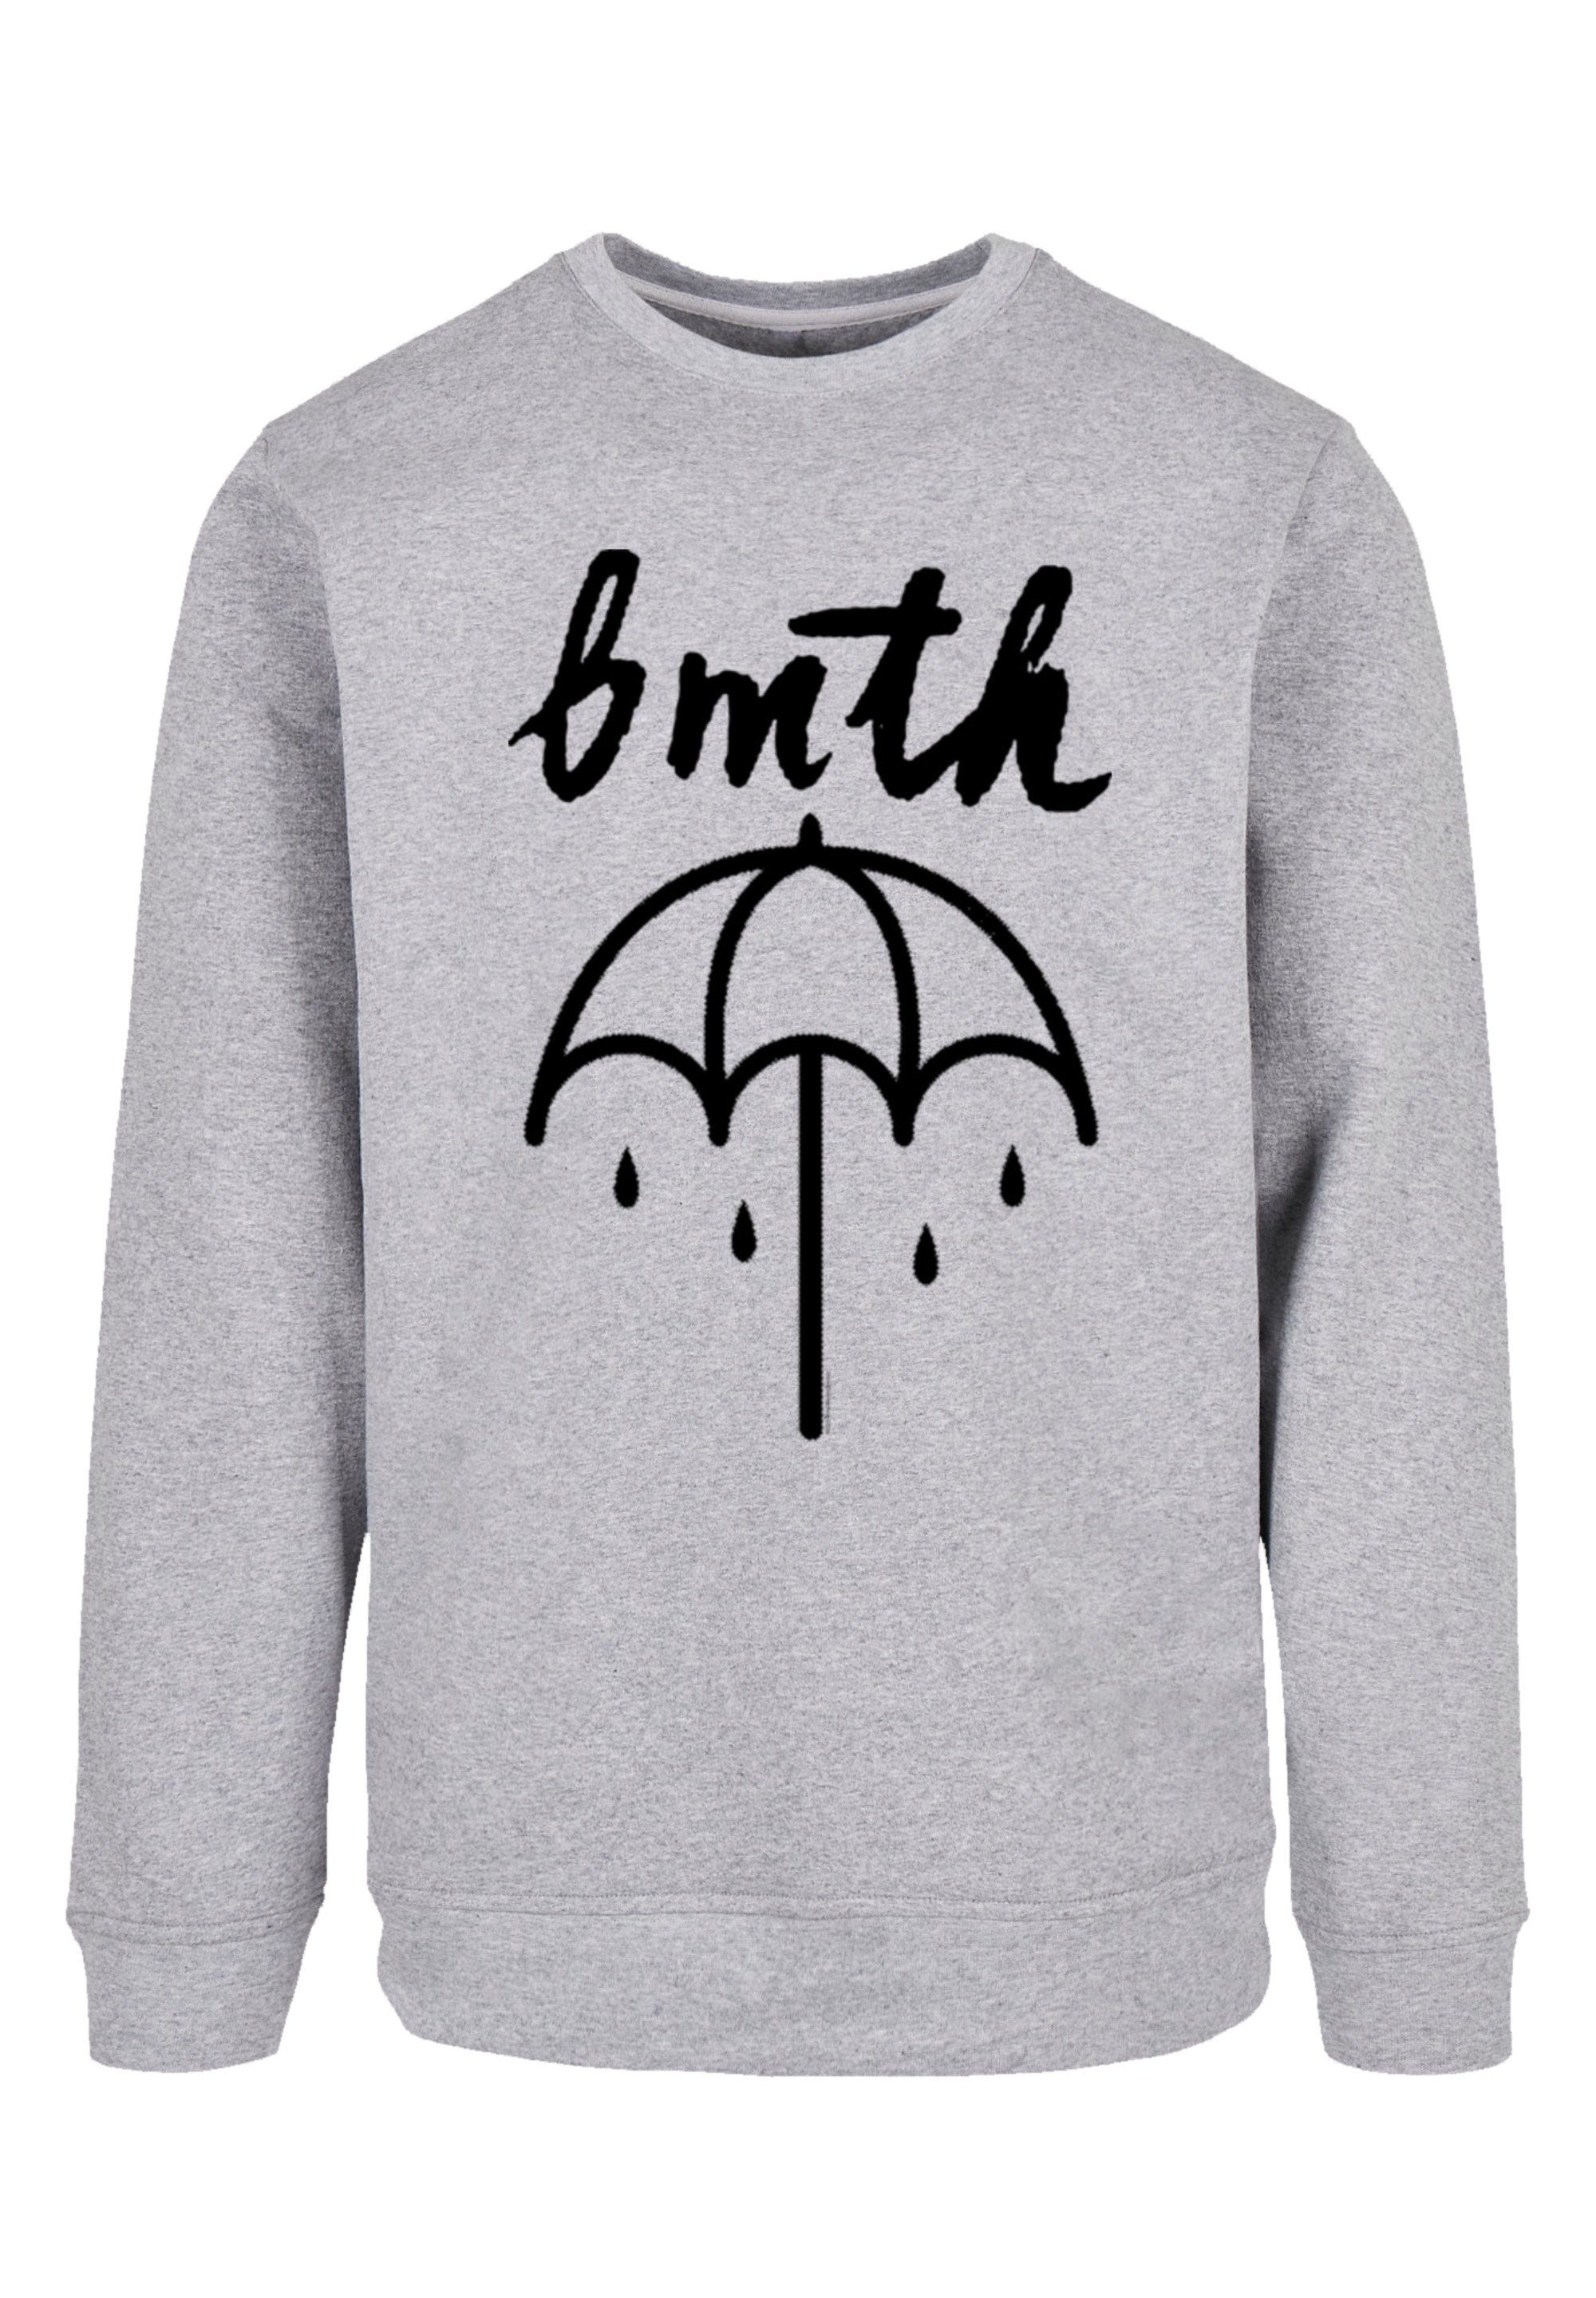 Band Sweatshirt Premium Rock-Musik, Qualität, Umbrella BMTH Band F4NT4STIC Metal